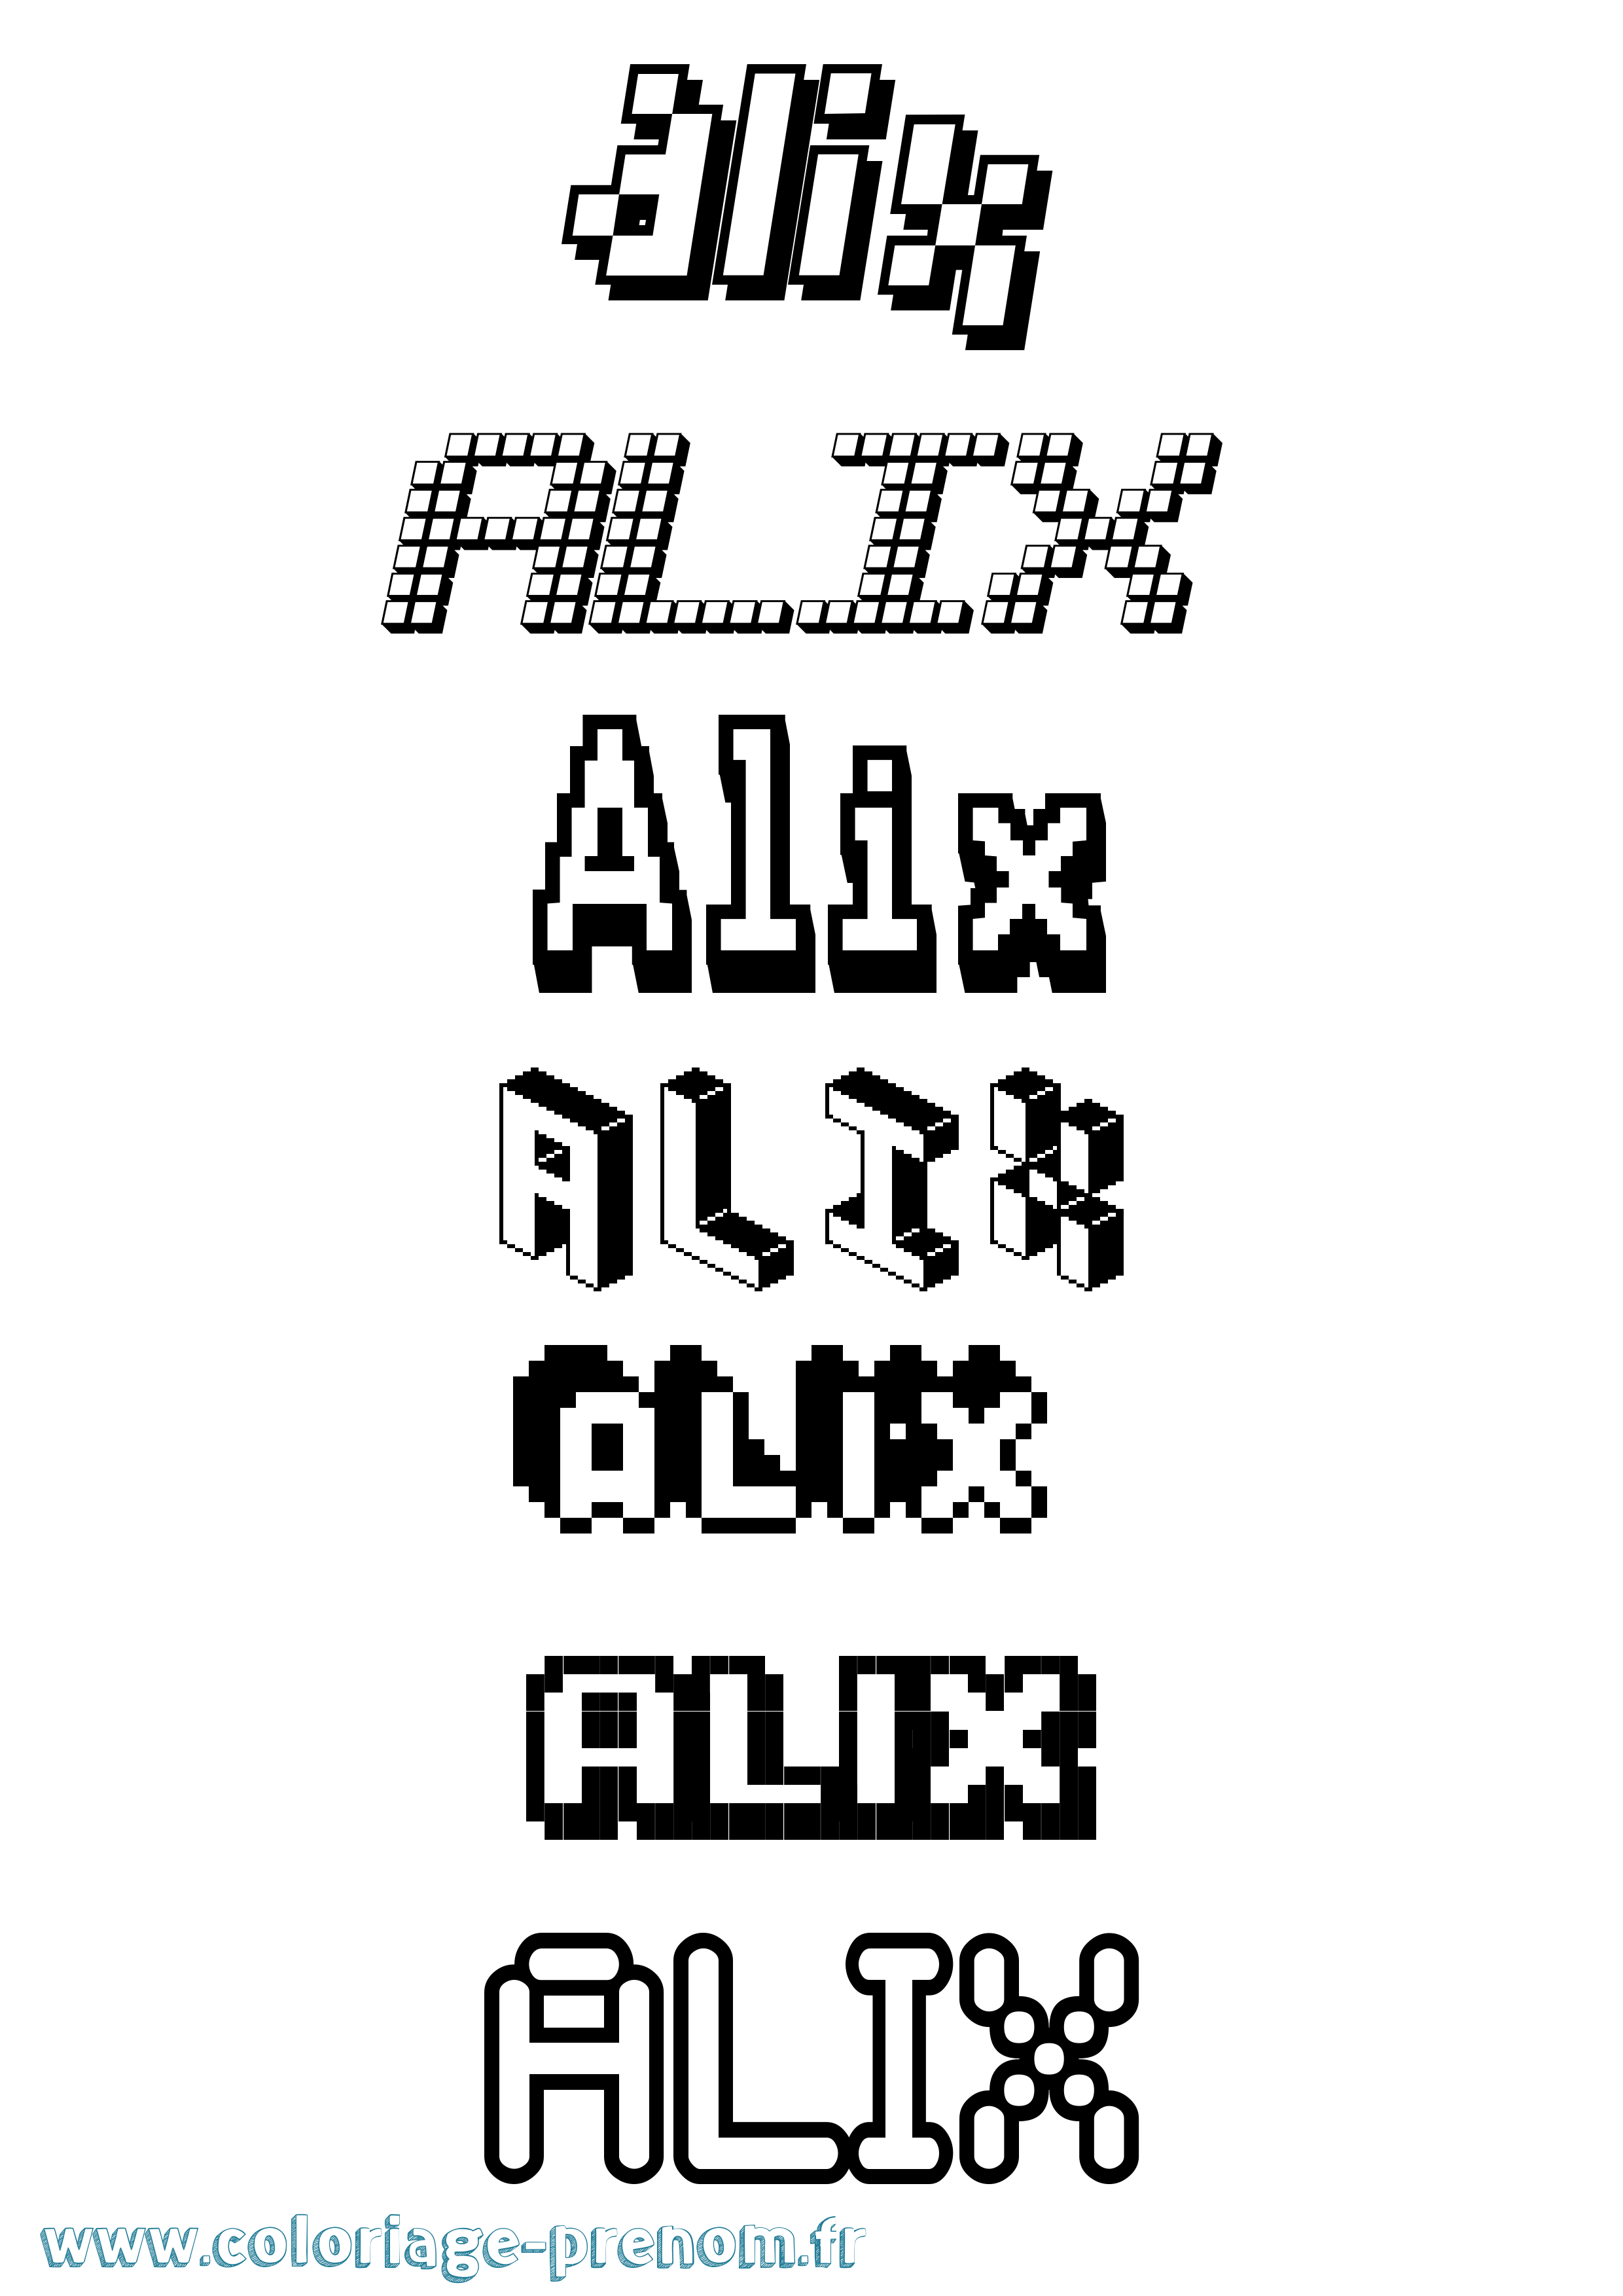 Coloriage prénom Alix Pixel